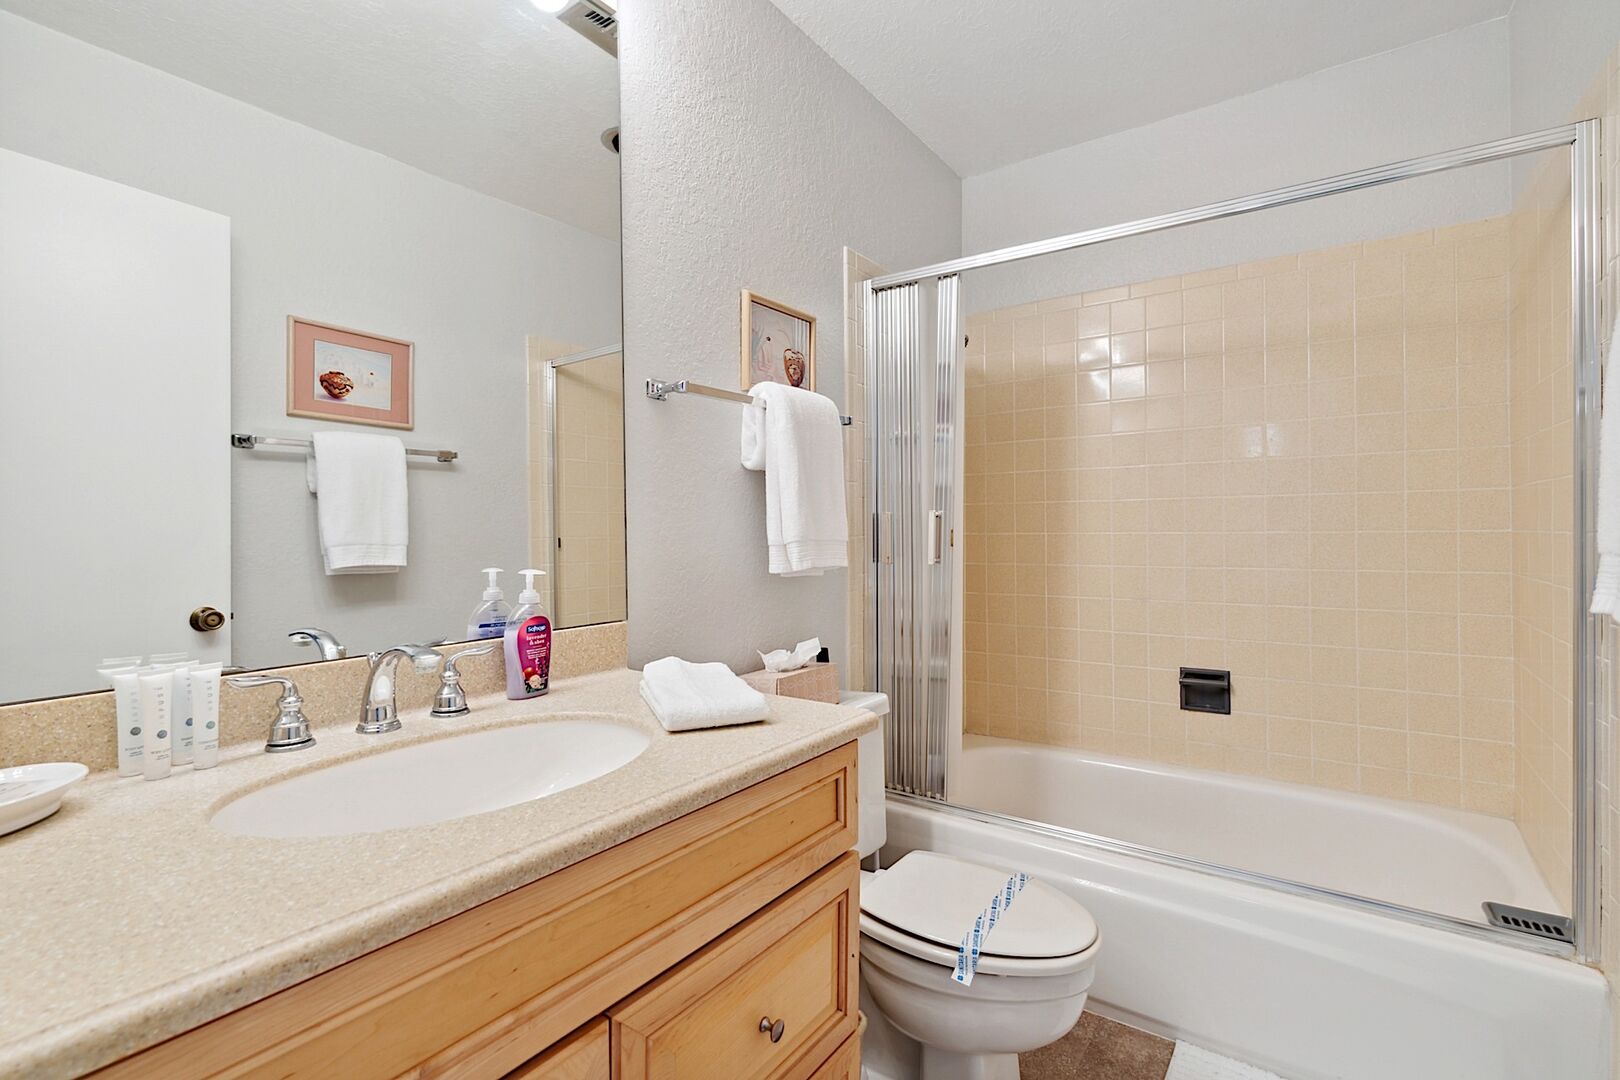 Second Bathroom - Tub/Shower Combo